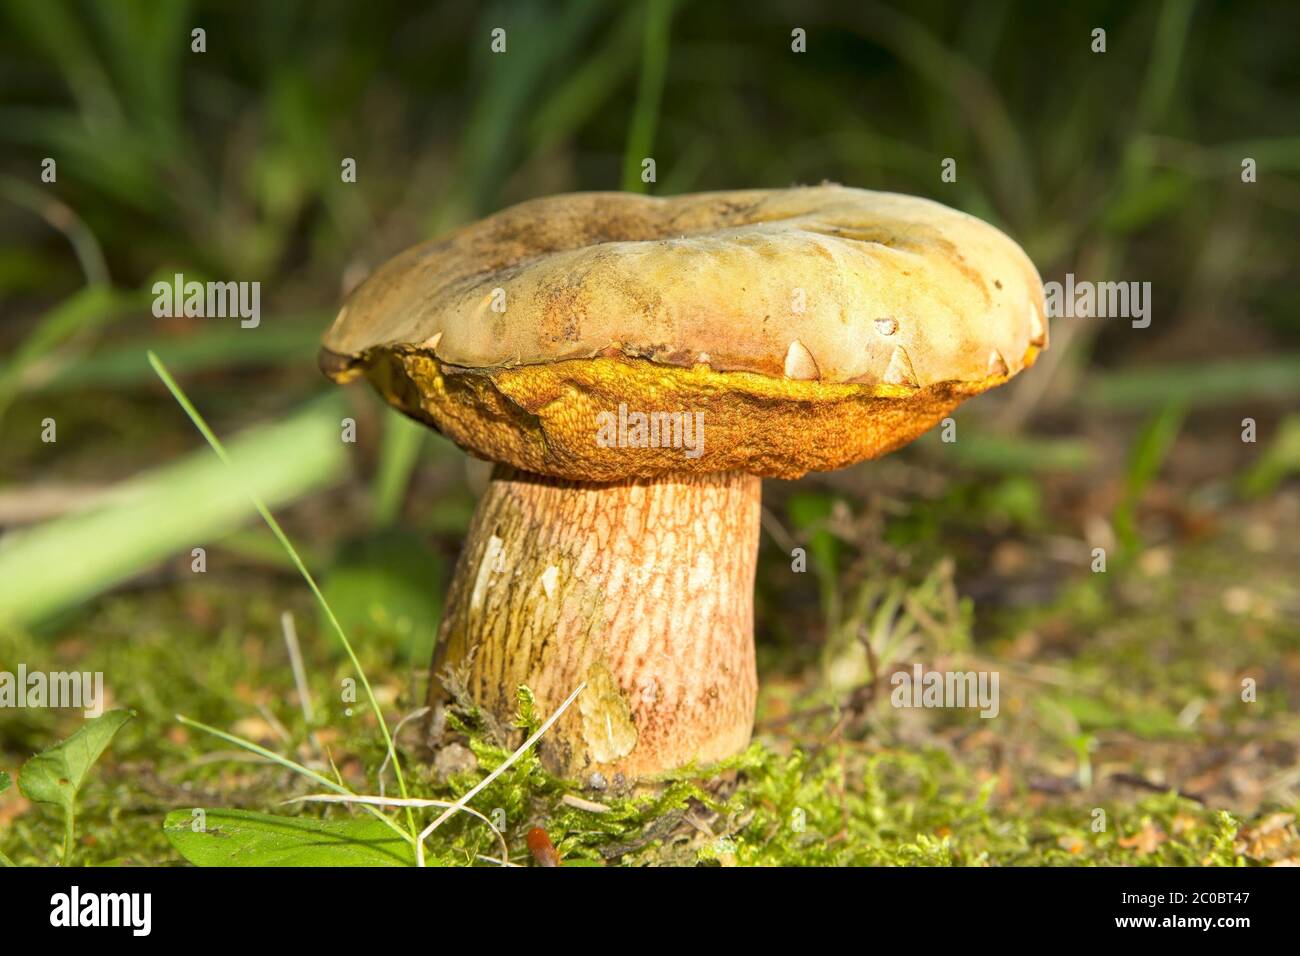 Nice big brown mushroom in the grass. Stock Photo